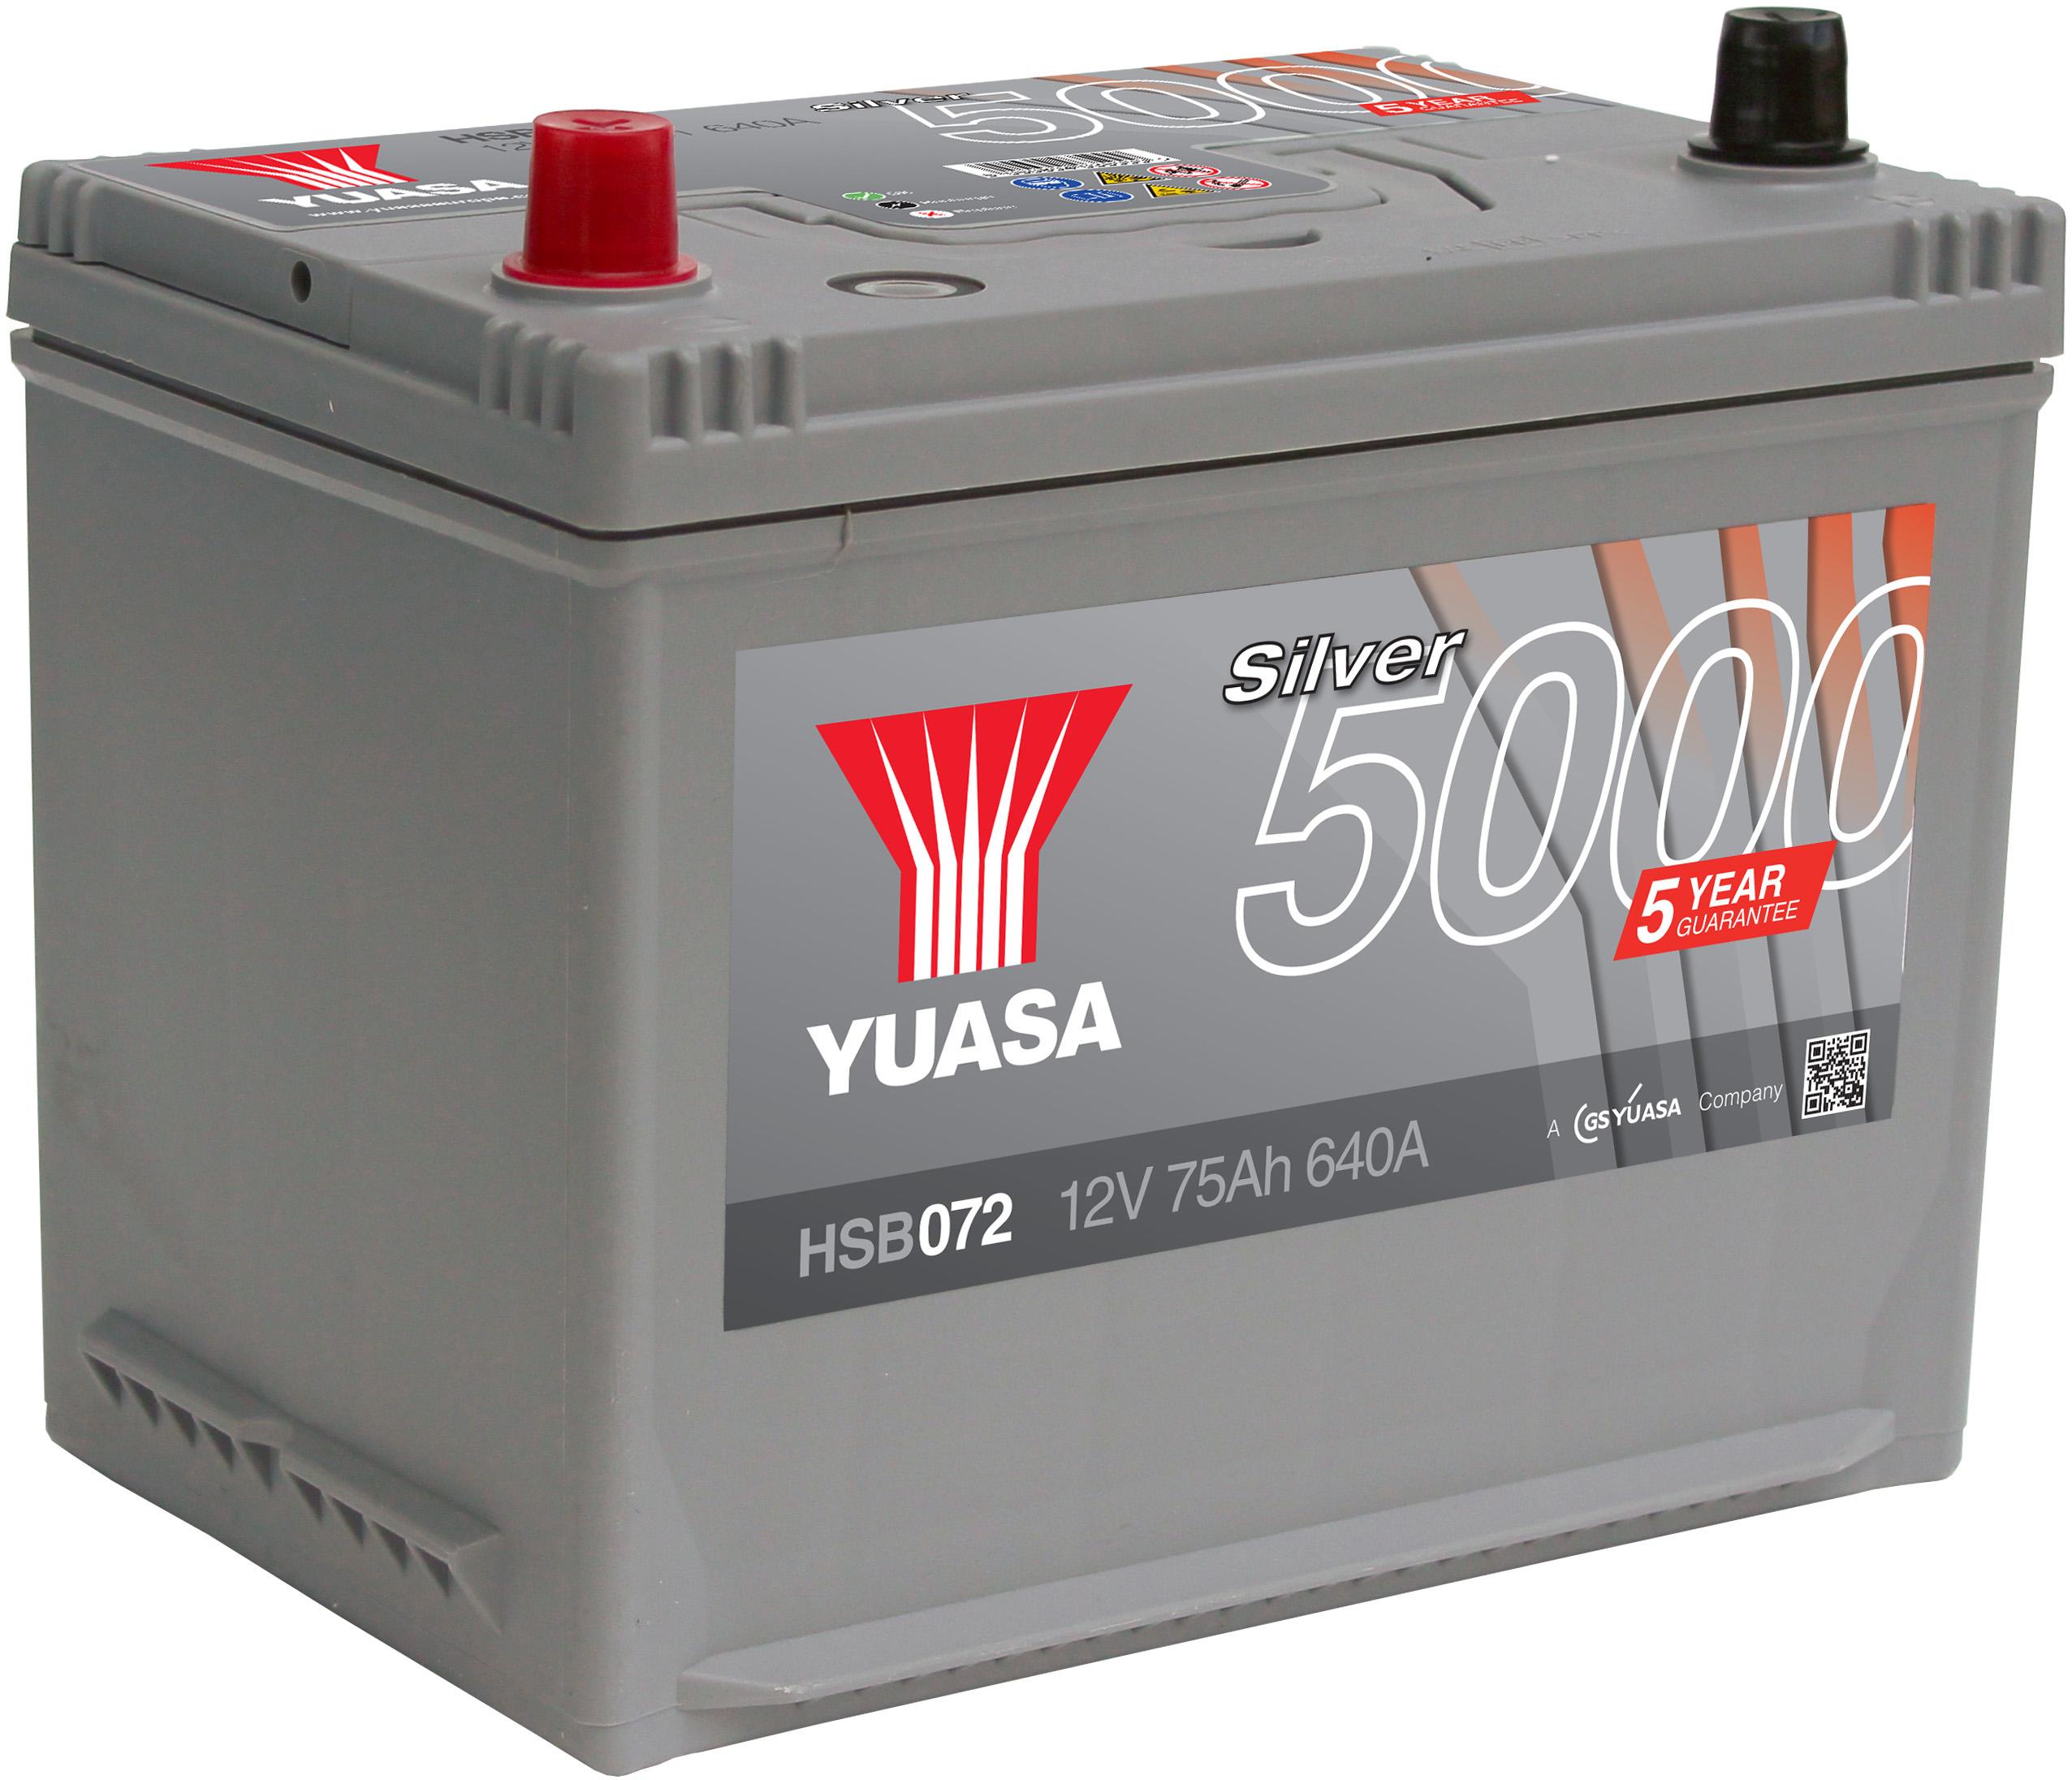 Yuasa Hsb072 Silver 12V Car Battery 5 Year Guarantee